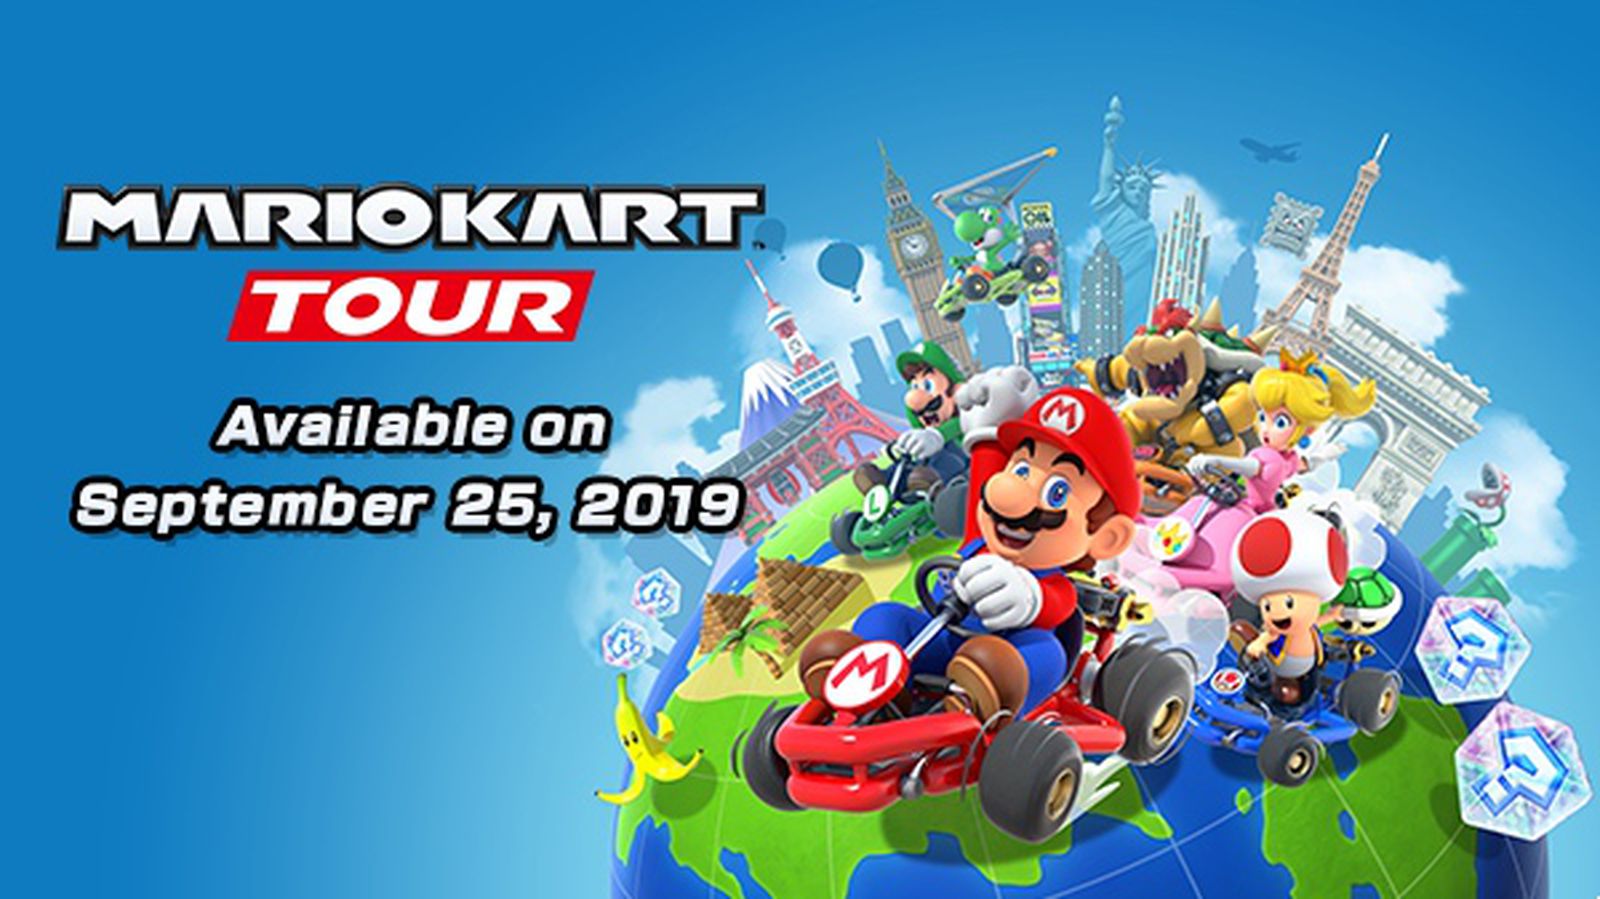 Nintendo S Mario Kart Tour Game For Ios Launching On September 25 Macrumors